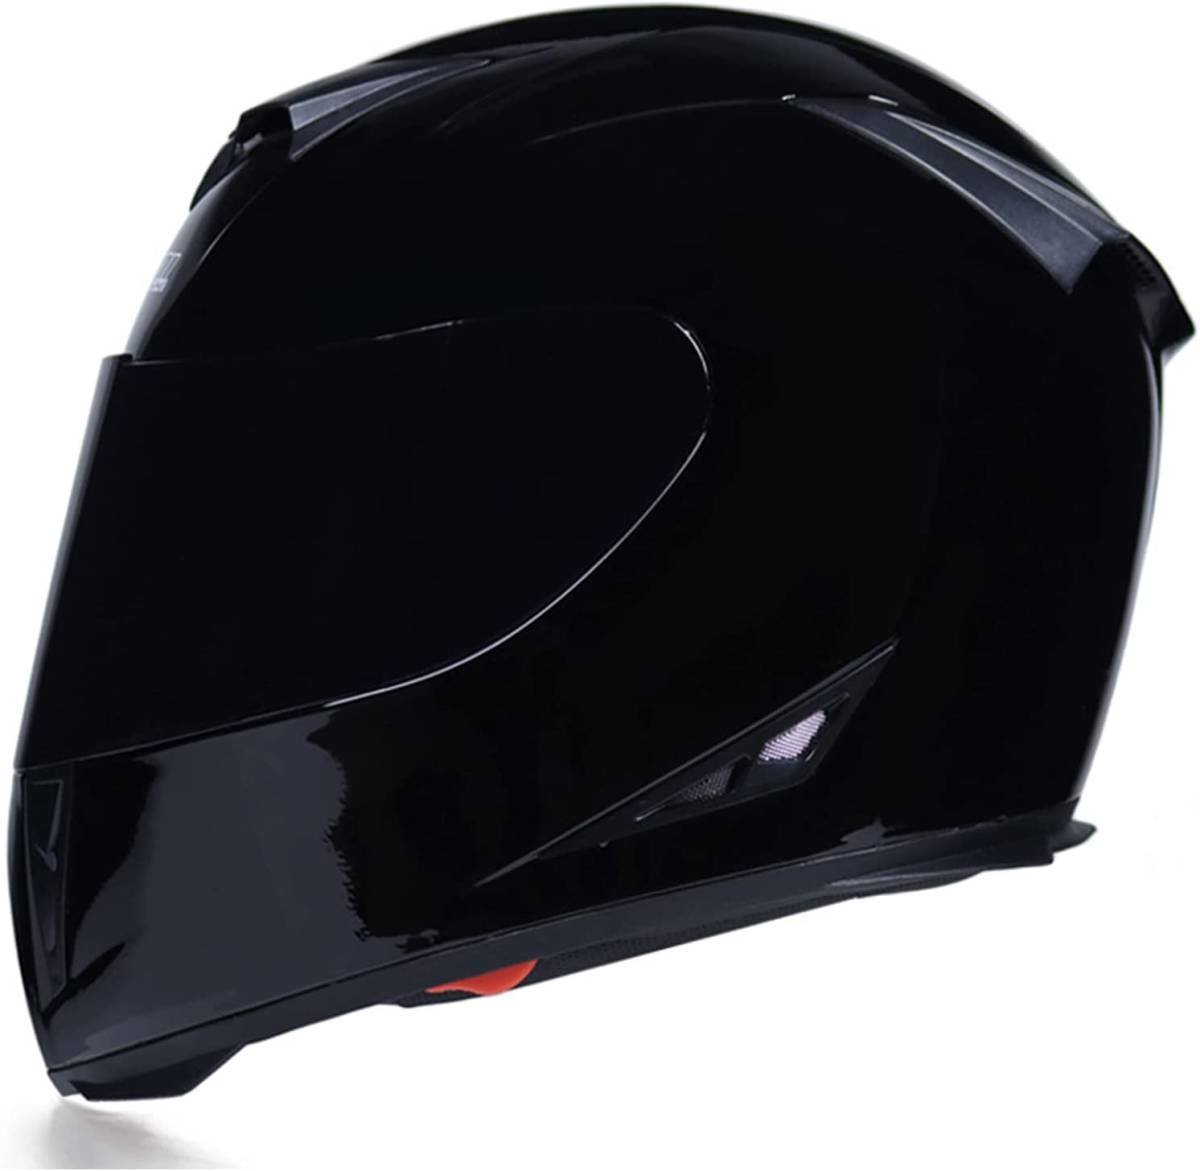 TZX460* bike helmet full-face helmet motorcycle helmet motocross men's lady's double shield сolor selection possible man and woman use black 